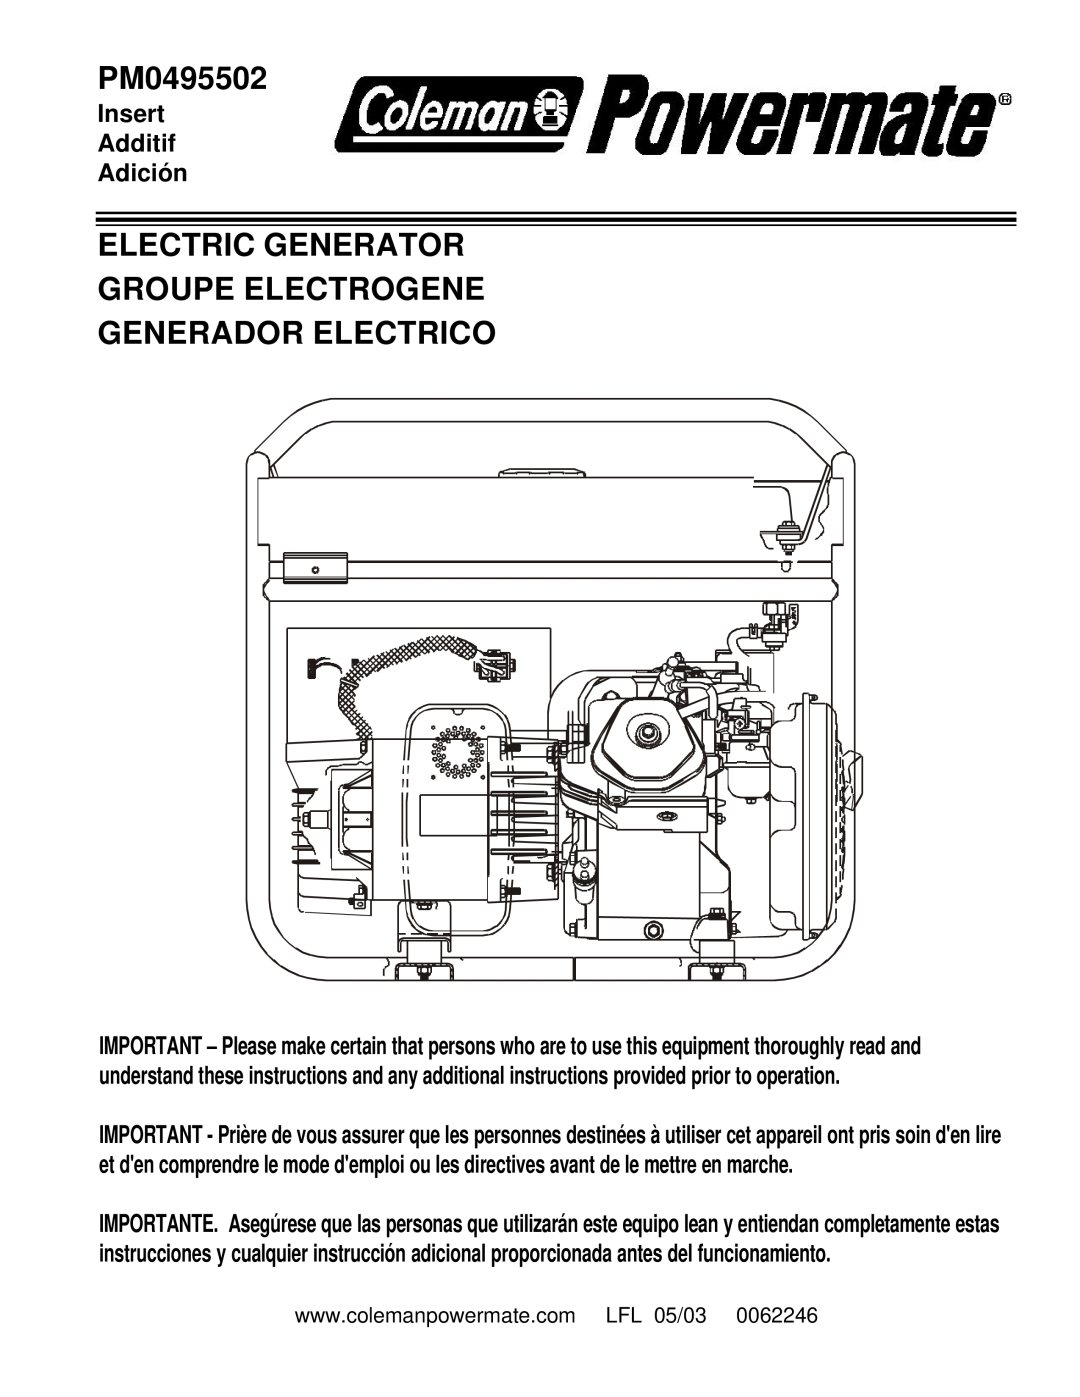 Powermate PM0495502 manual Electric Generator Groupe Electrogene Generador Electrico, Insert Additif Adición 